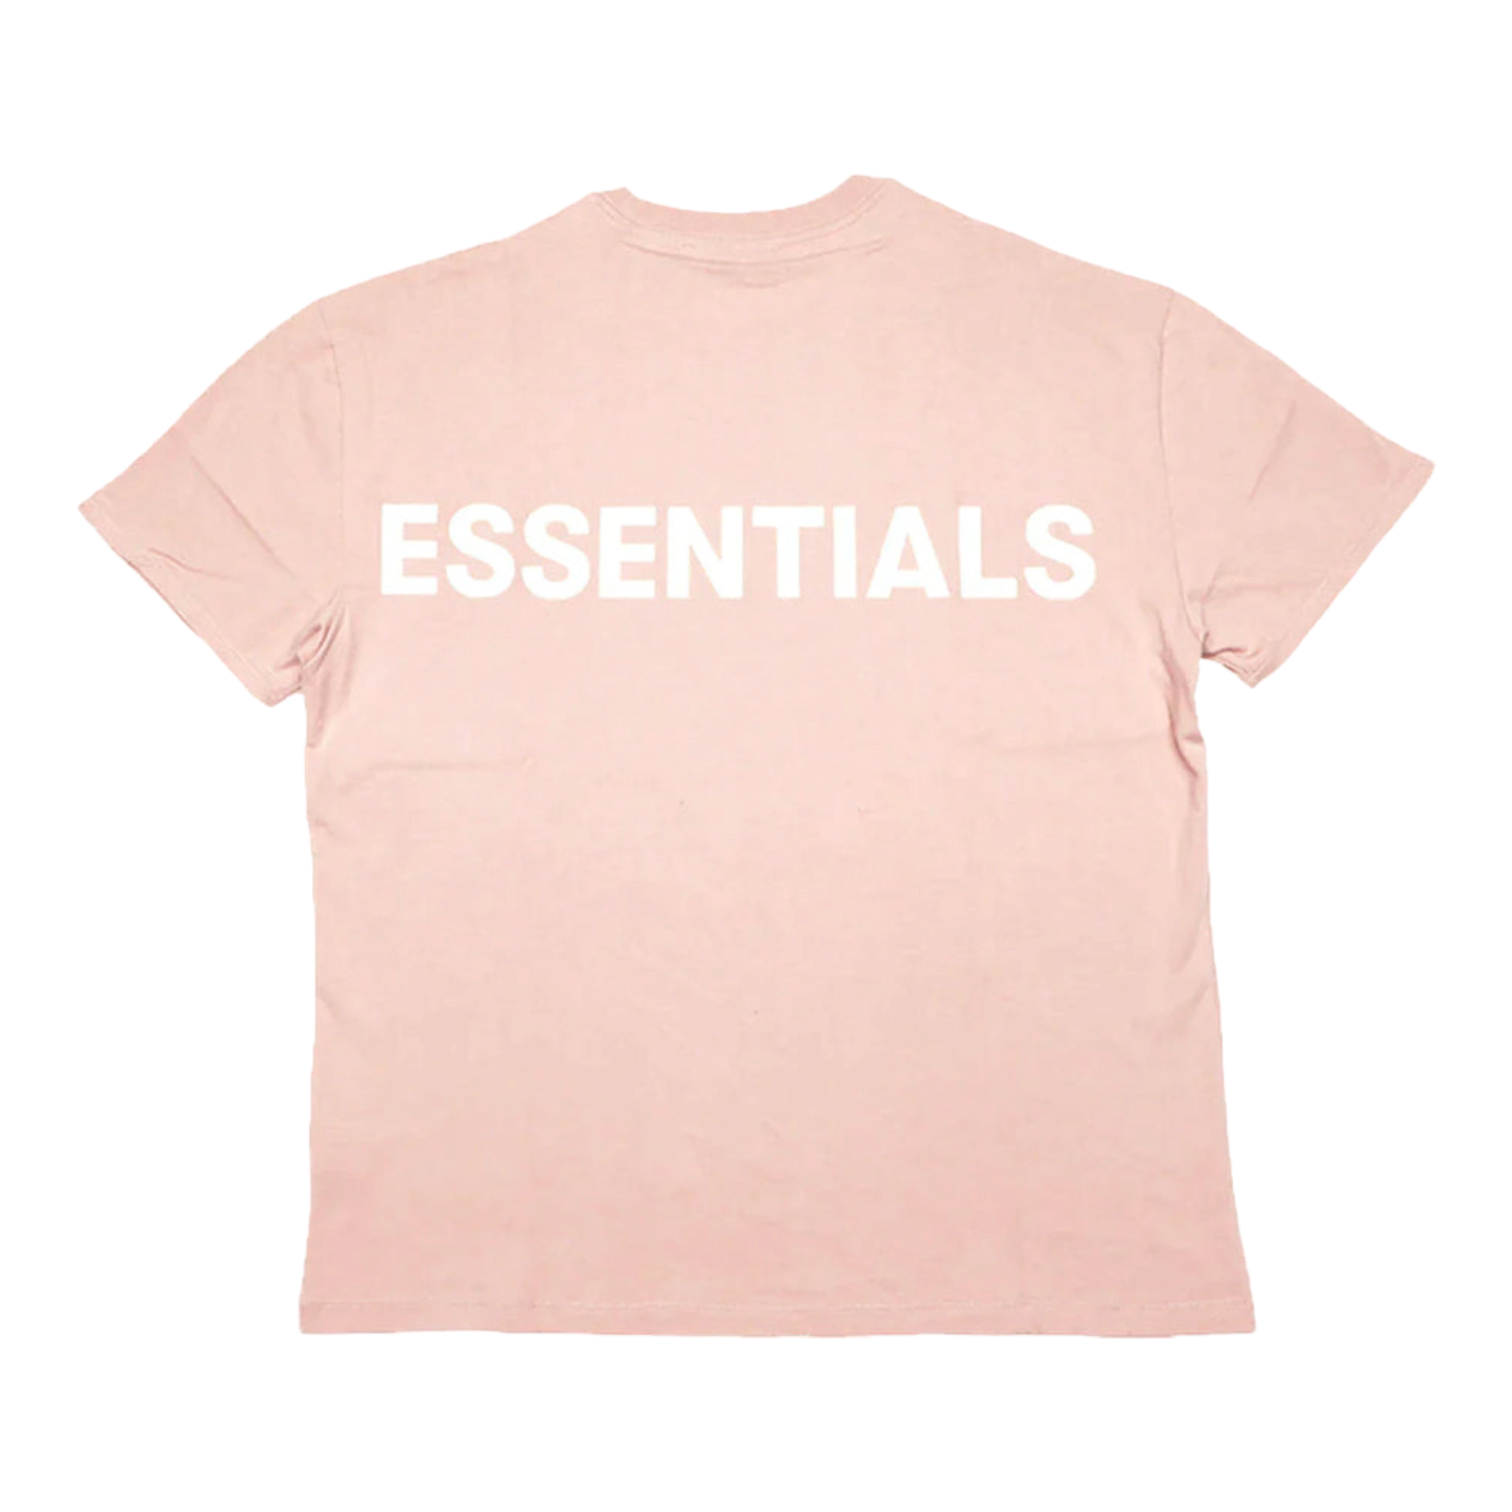 Essentials SS19 Reflective Tee Pink